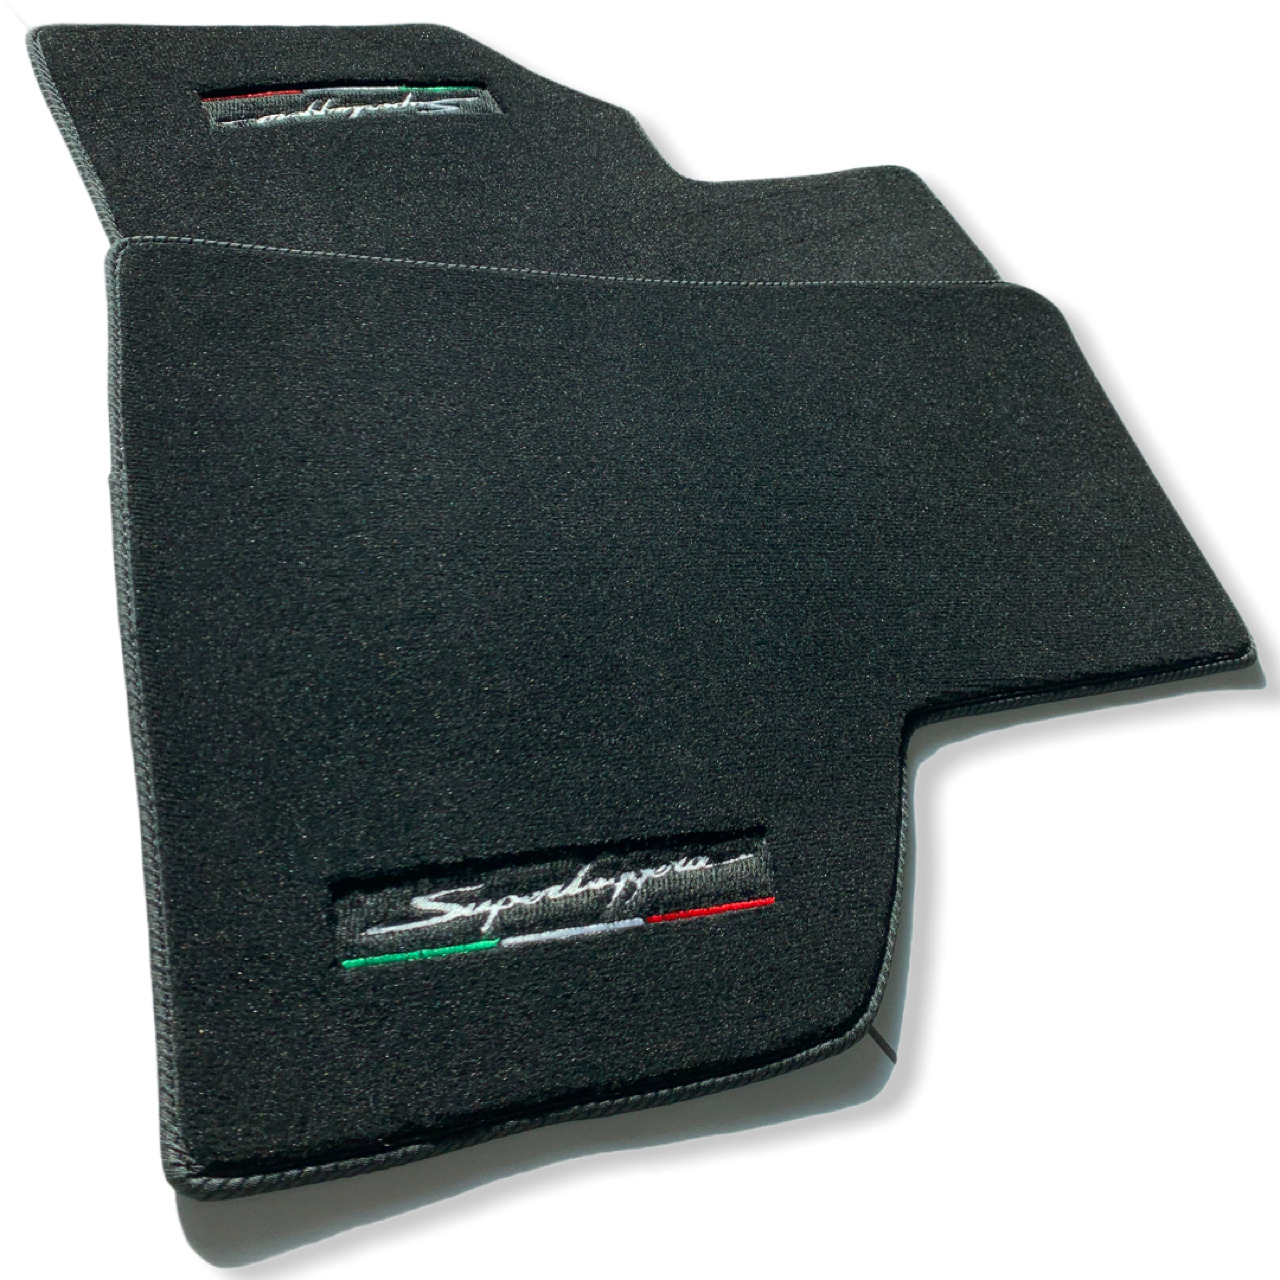 Floor Mats For Lamborghini Gallardo Black Tailored Carpets With Superleggera